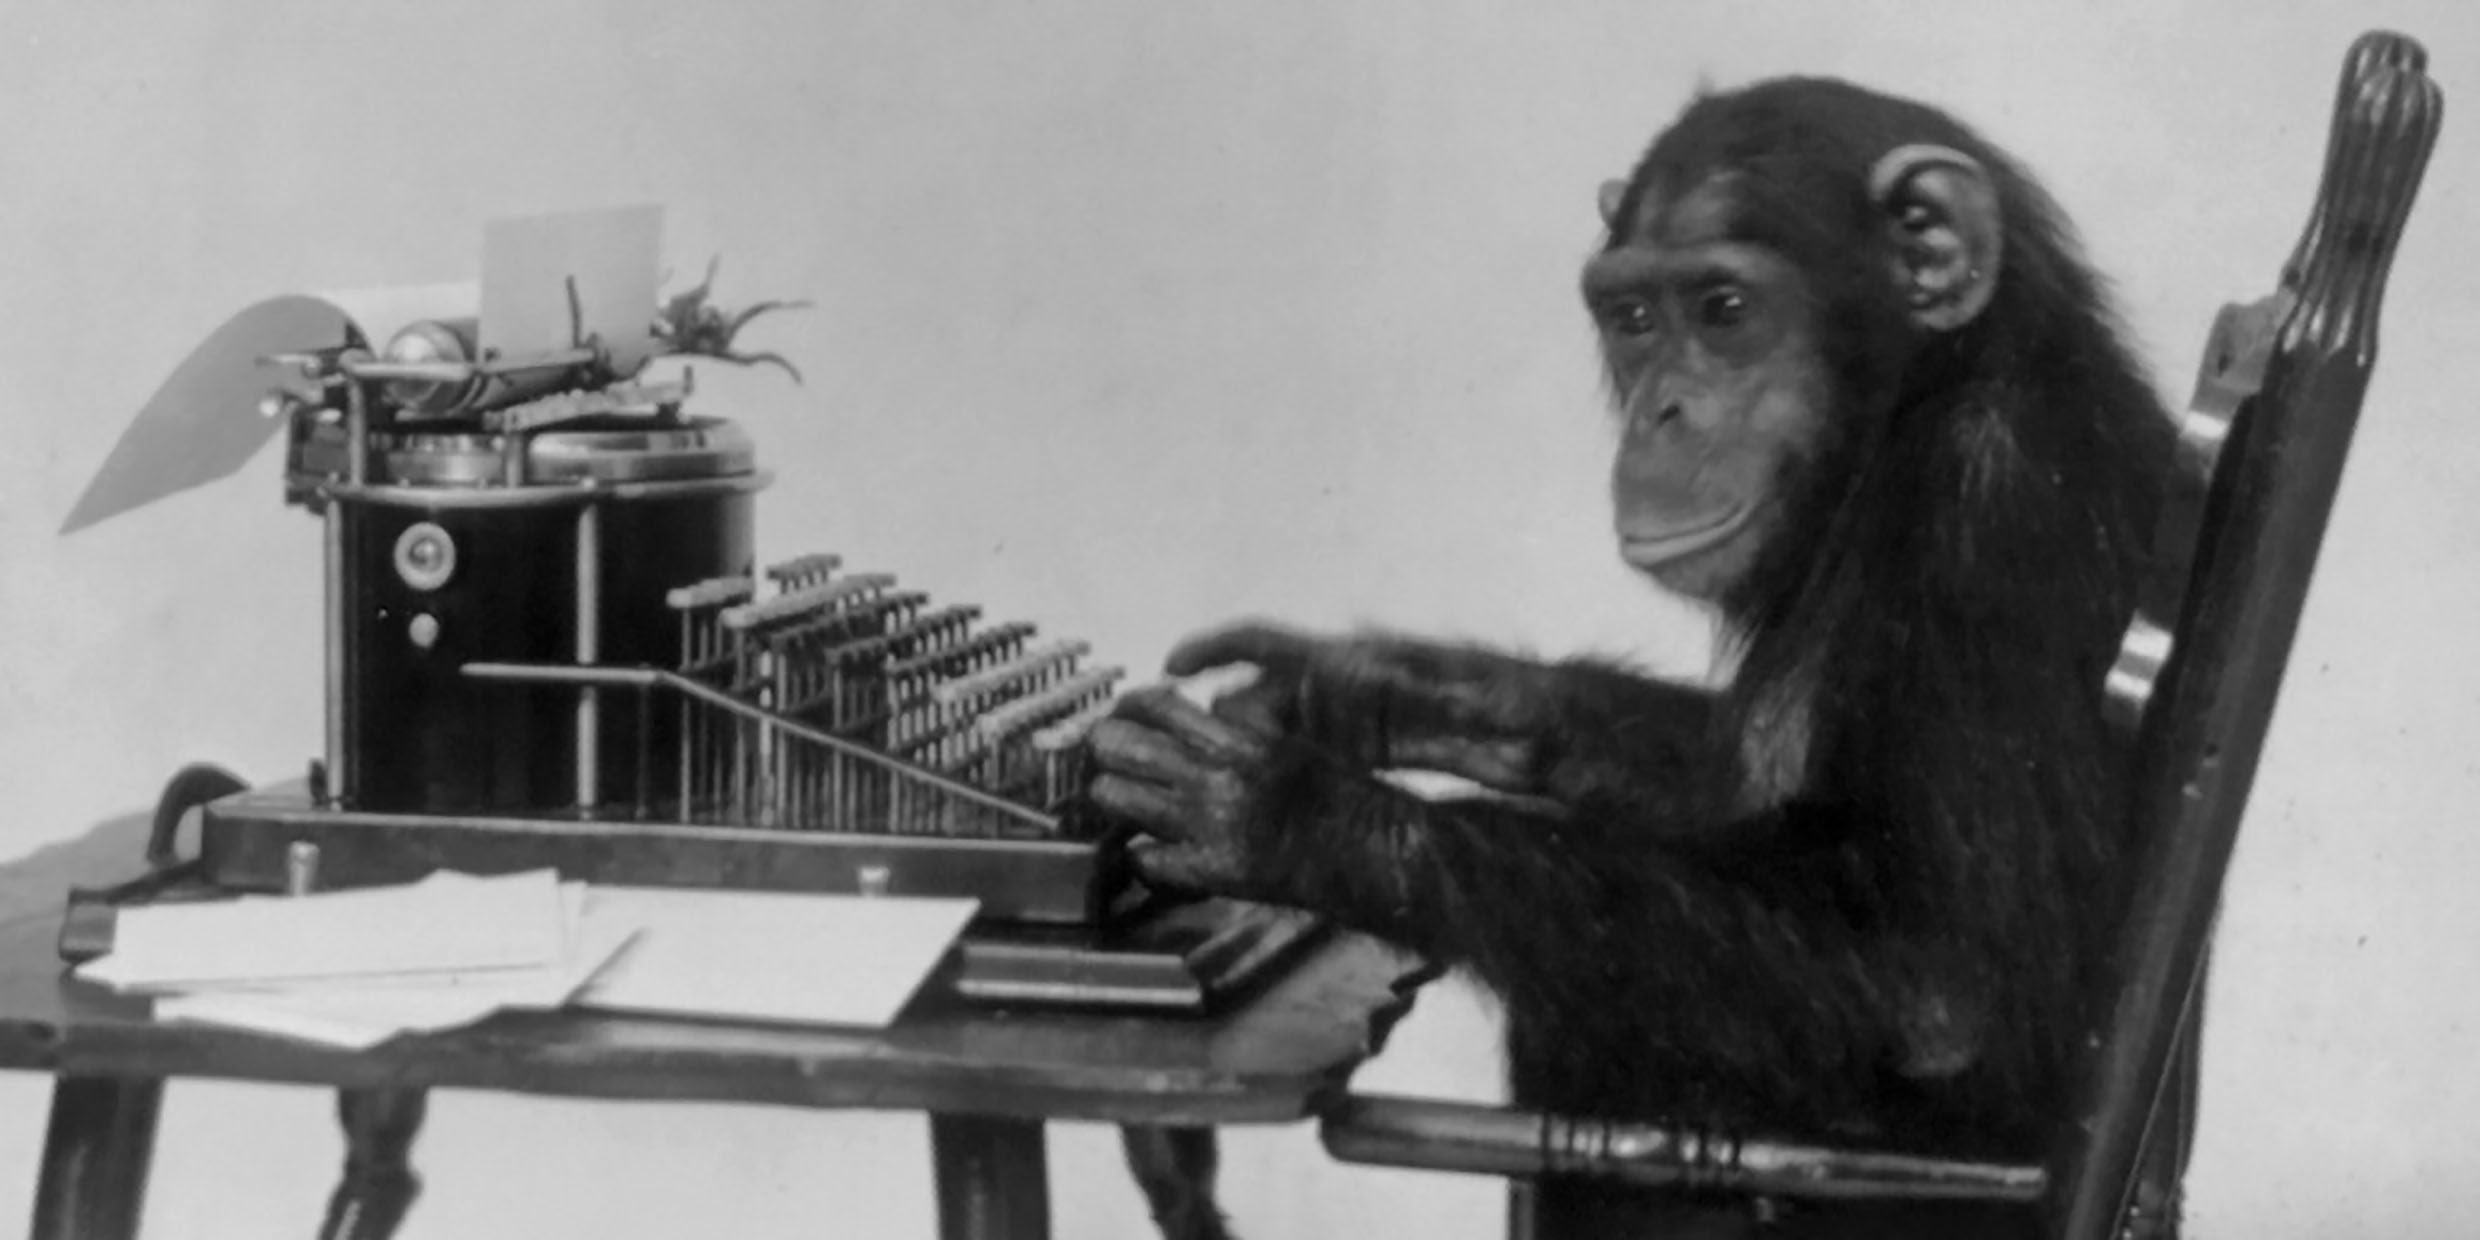 Image of a chimpanzee seated at a typewriter